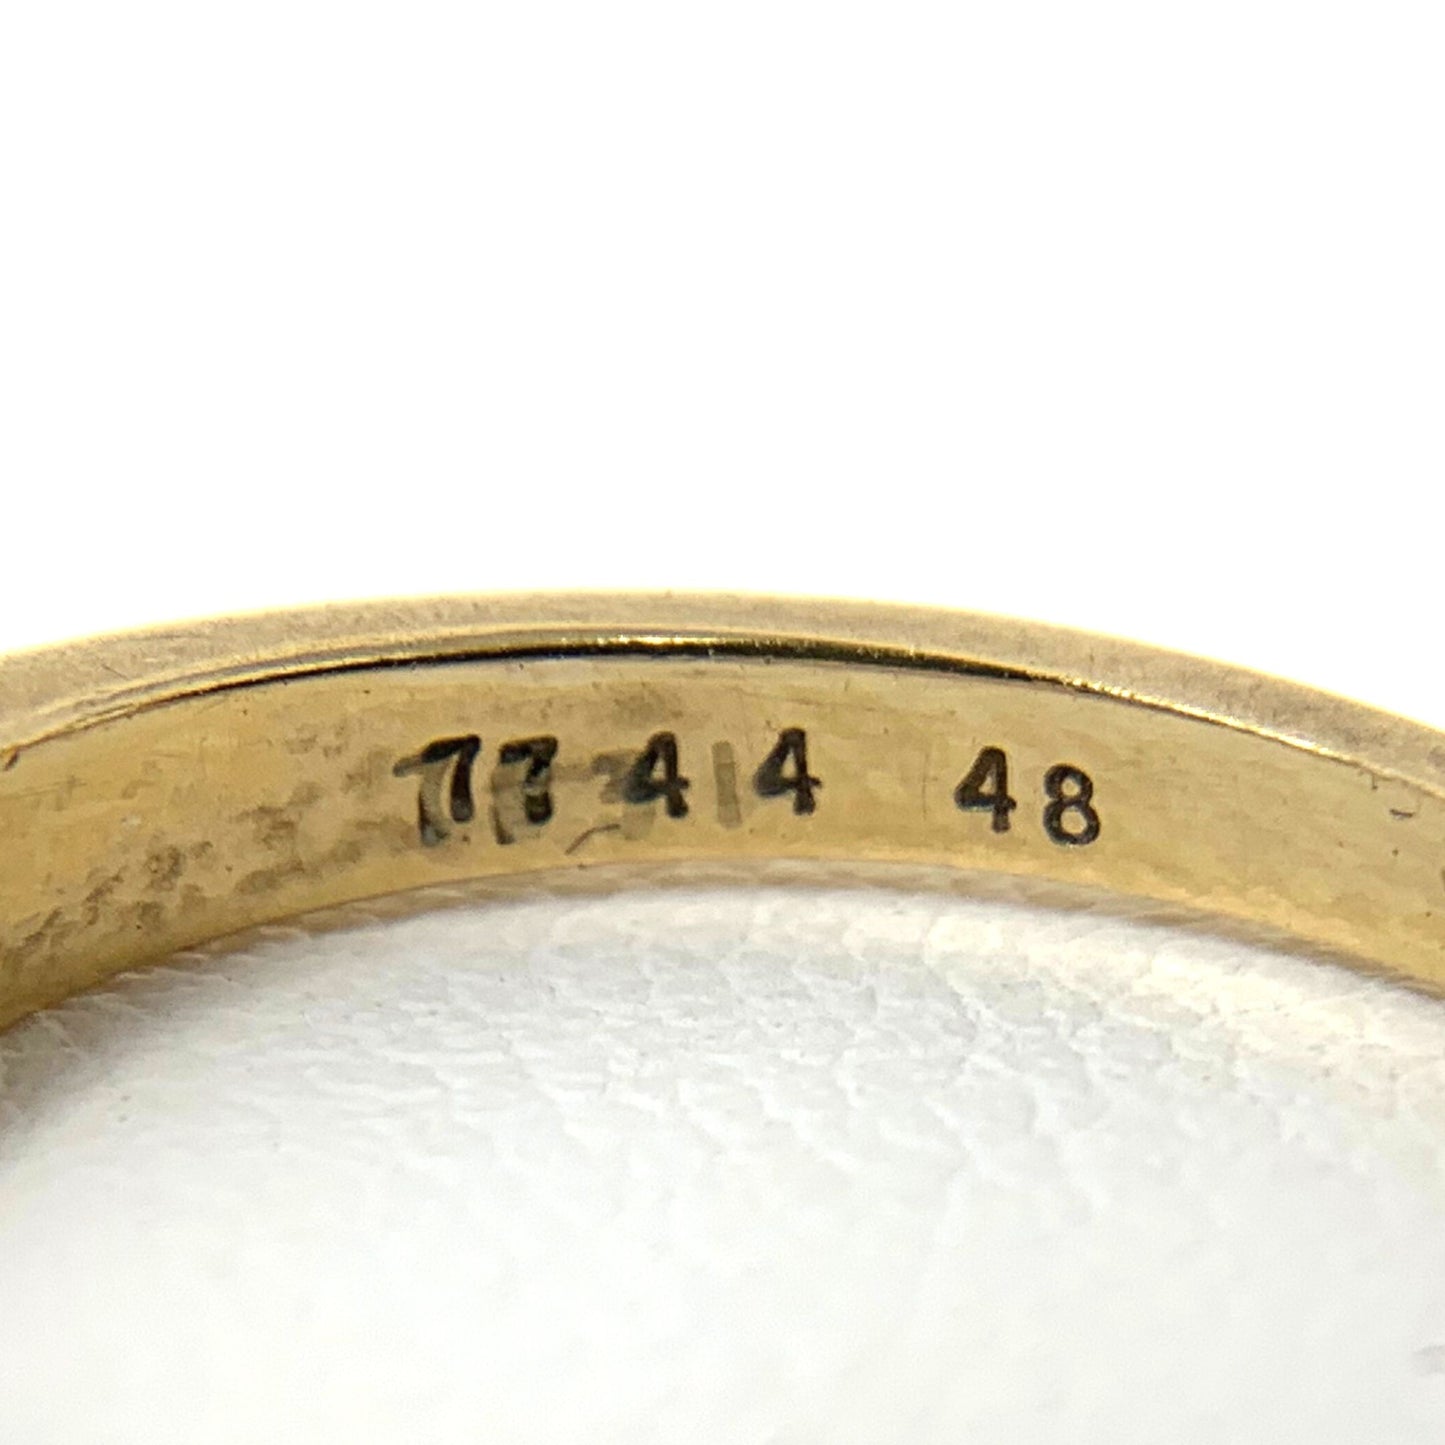 14K Gold 1/2tcw Diamond Engagement Ring - Size 5.75